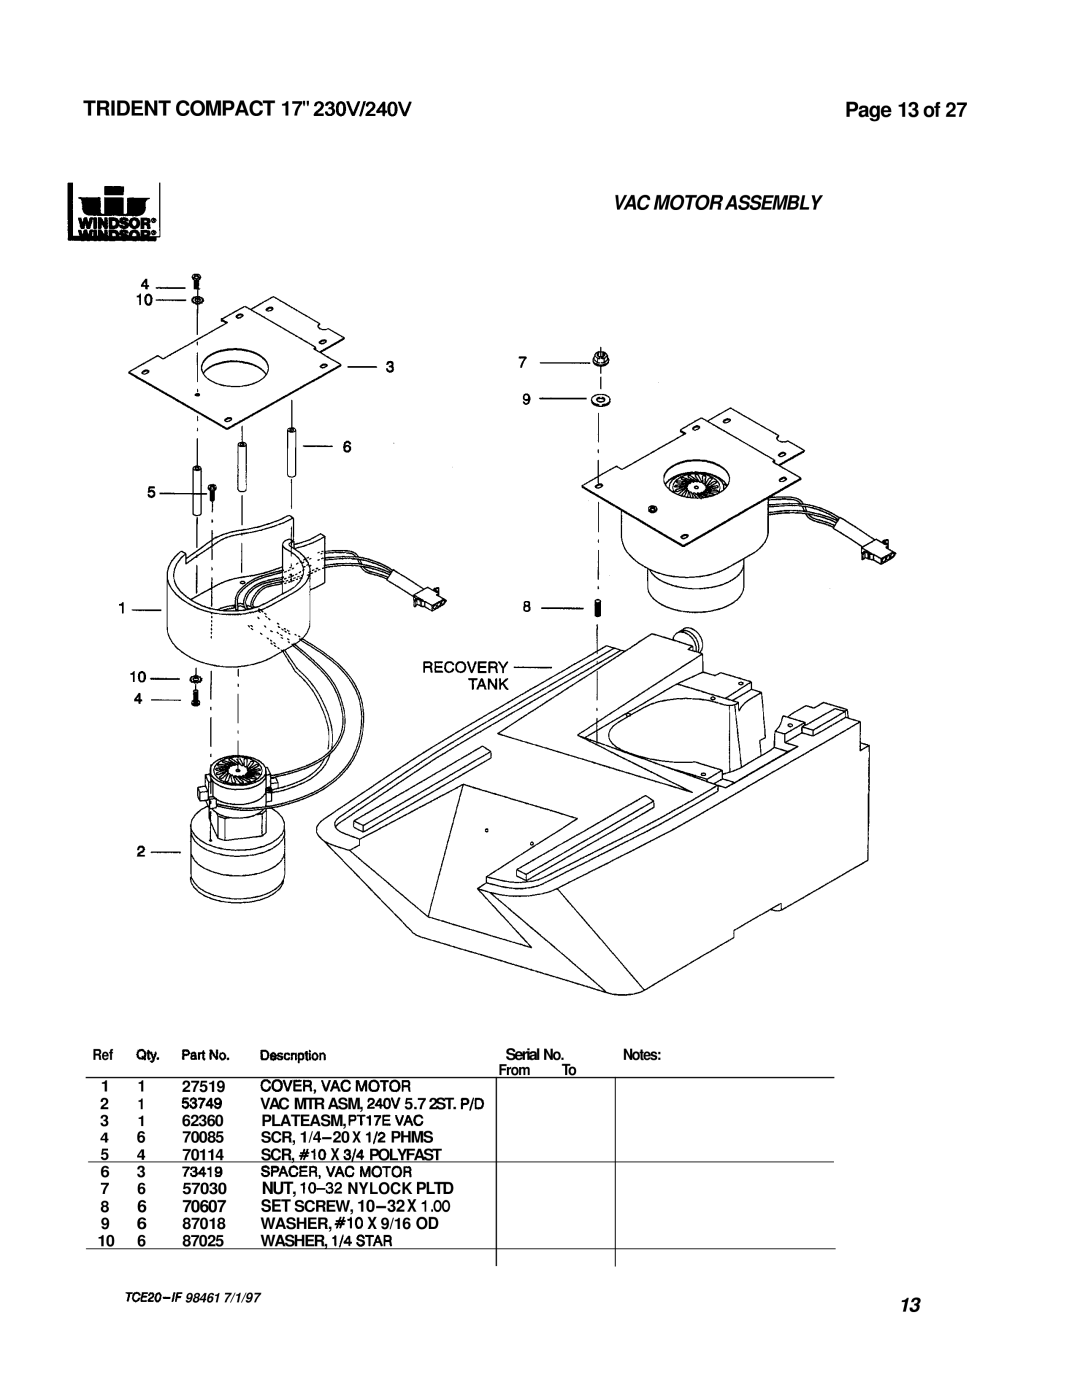 Windsor Vac Motor Assembly, Page 13 of, TRIDENT COMPACT 17 230V/240V, Piwindsor, Oescnption, 70607 